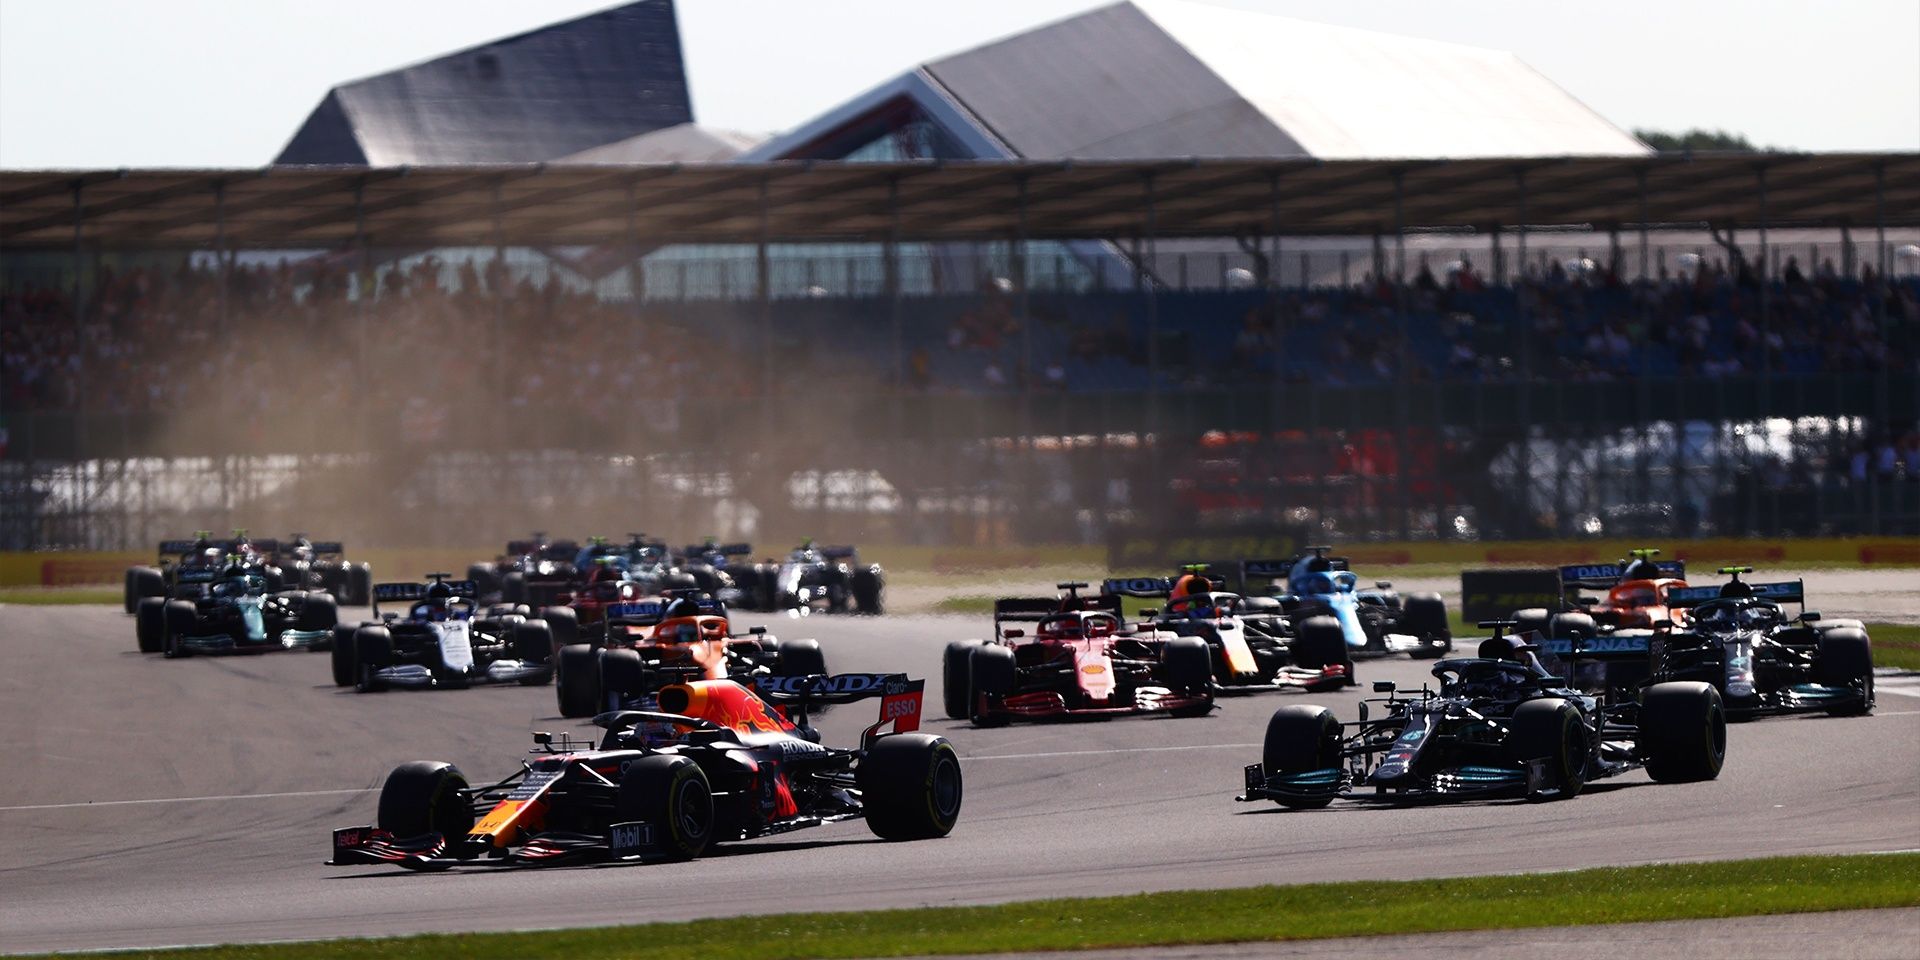 F1 Sprint Qualifying at Silverstone